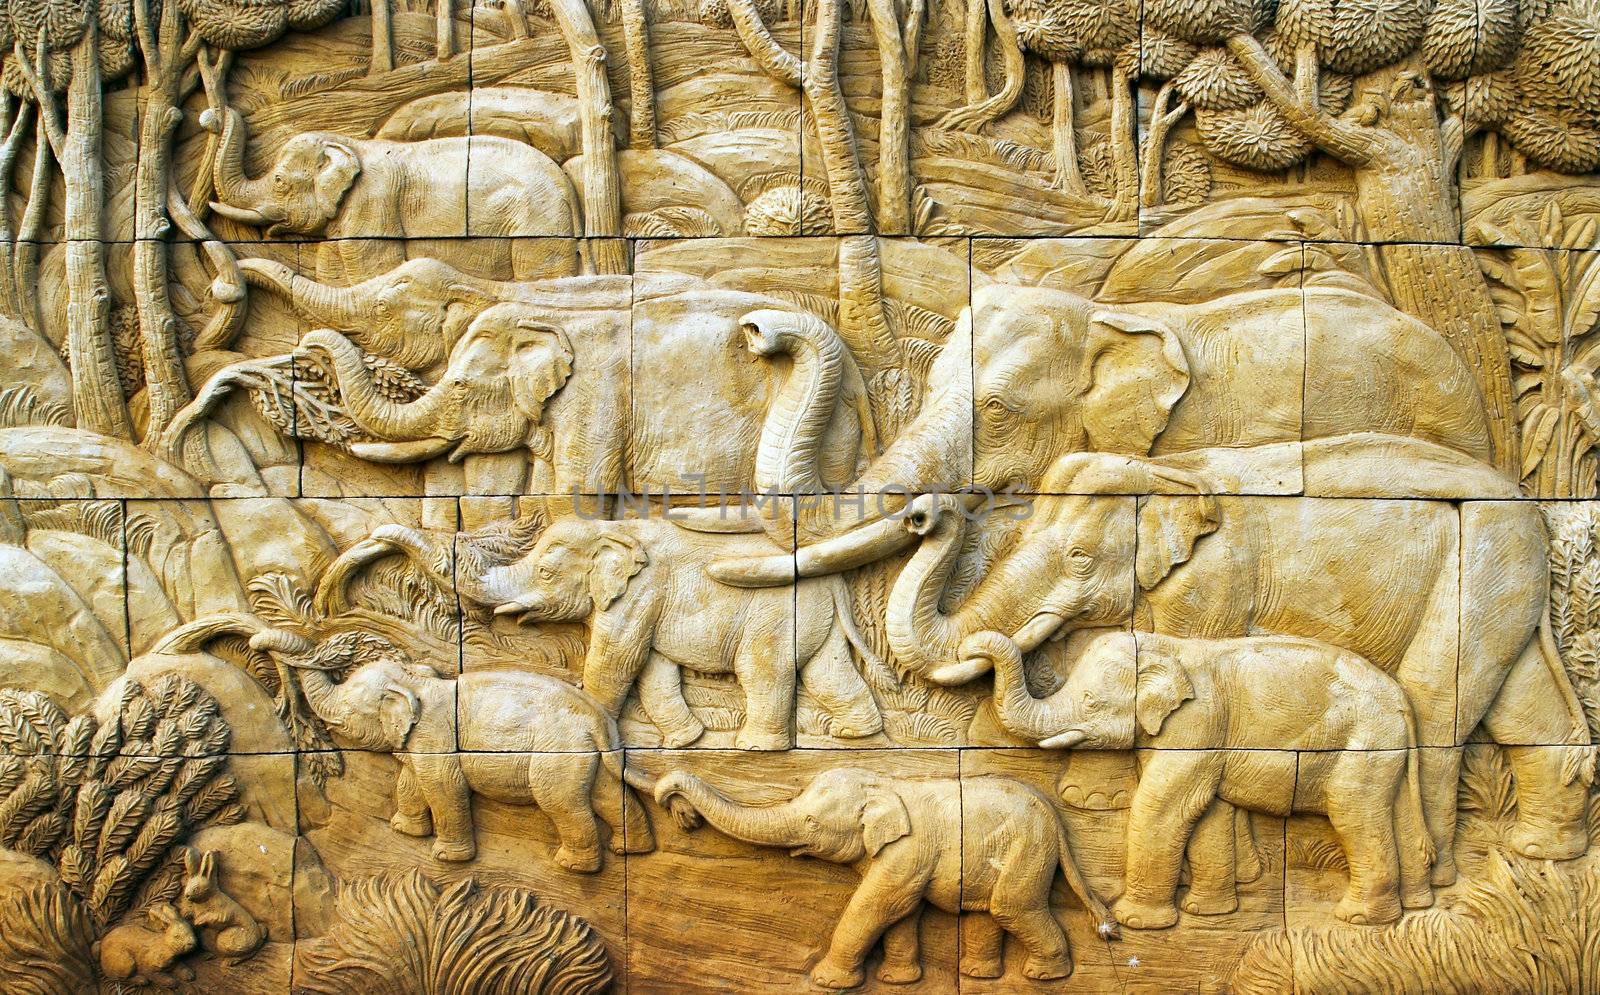 carved Elephant on stone wall